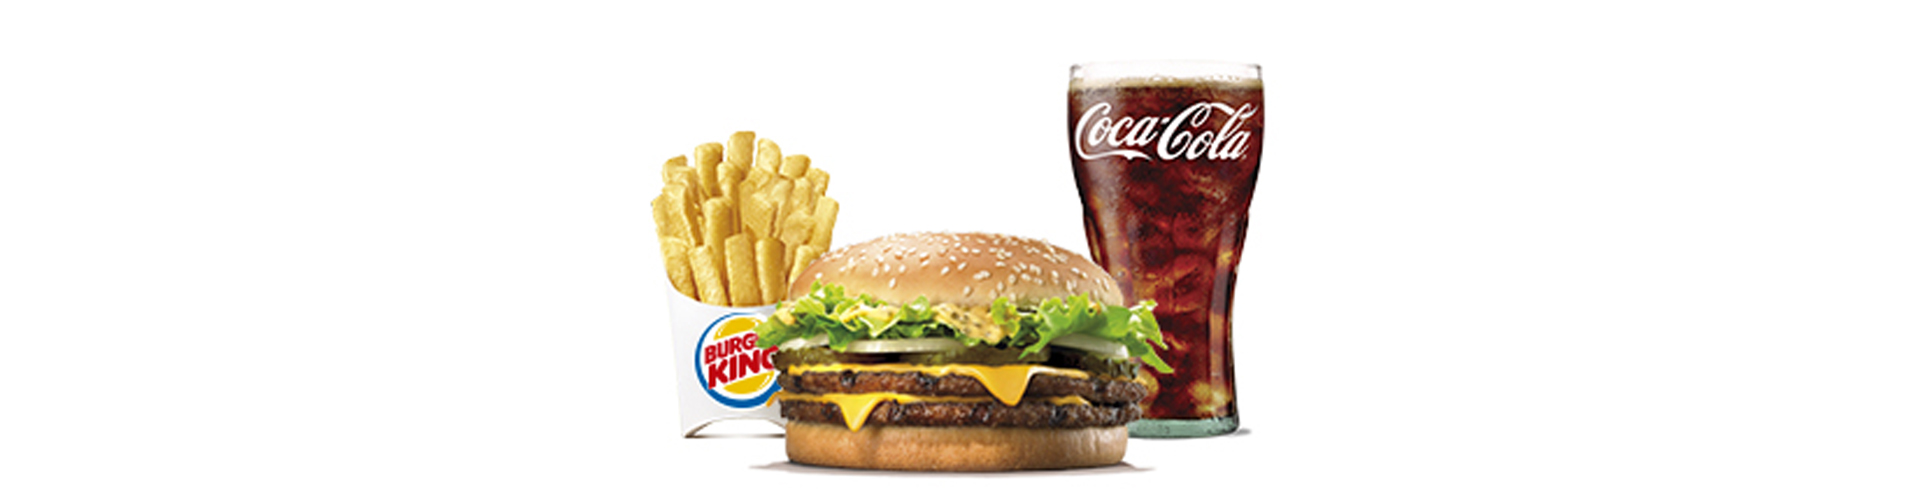 burgerking-40001712-limonada-aros